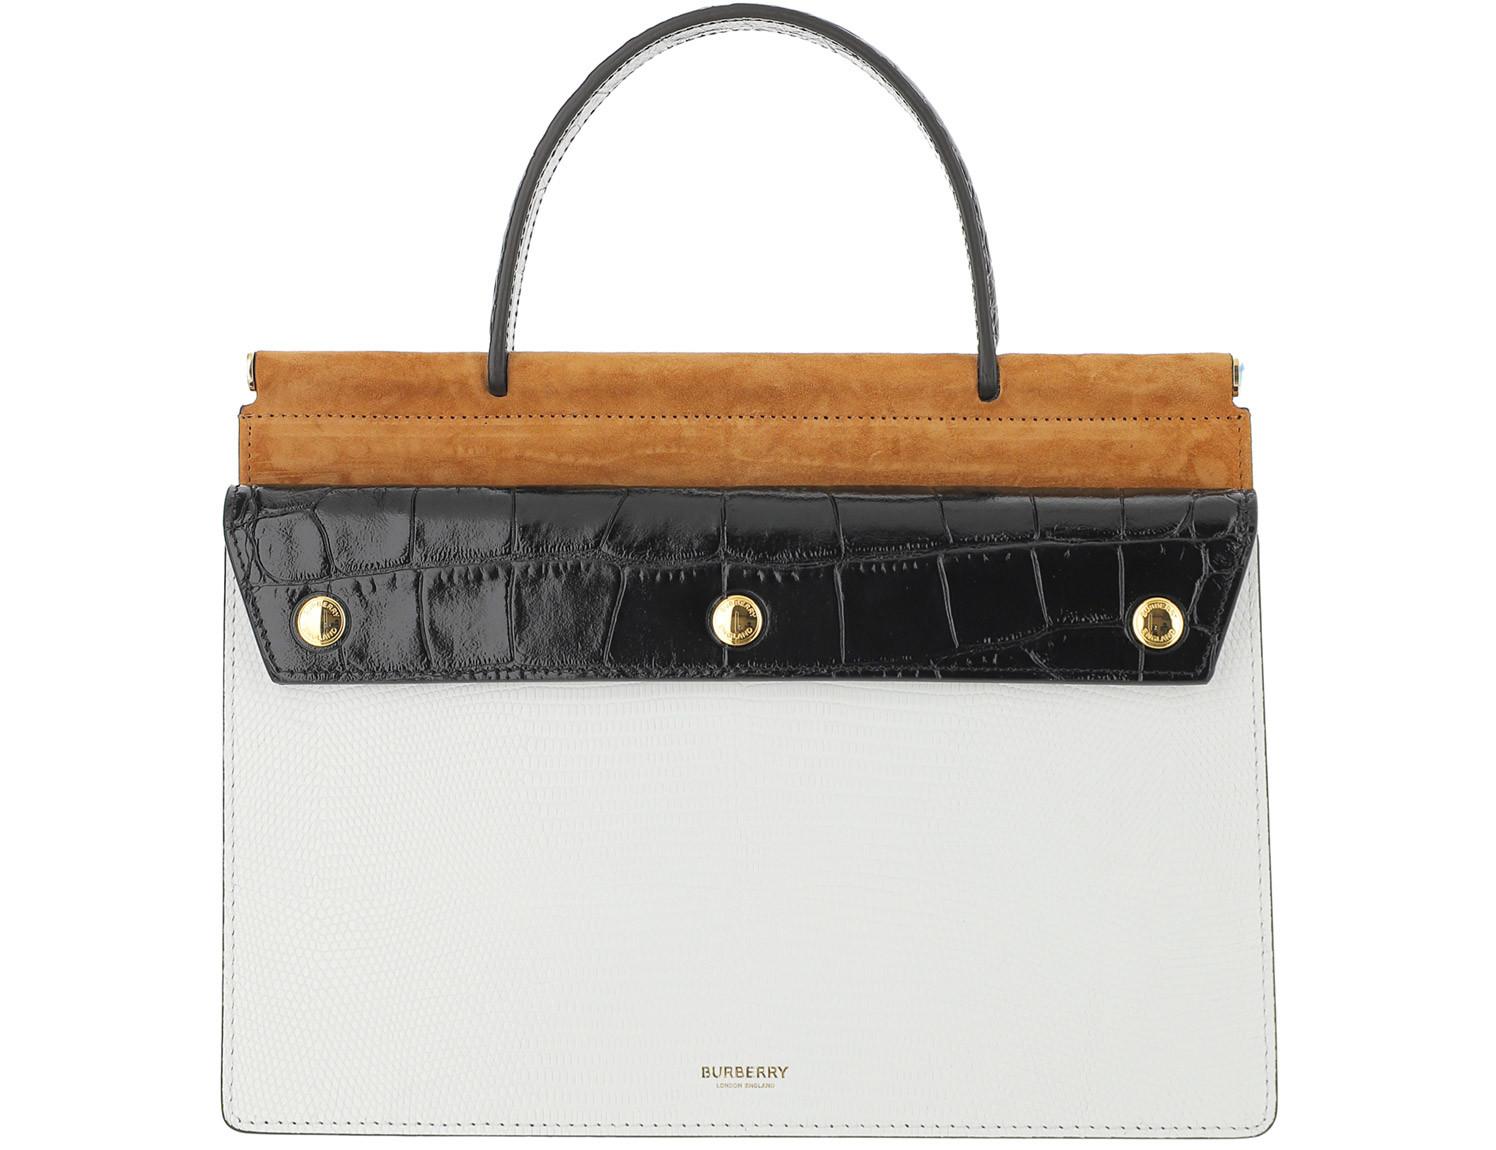 burberry leather handbags